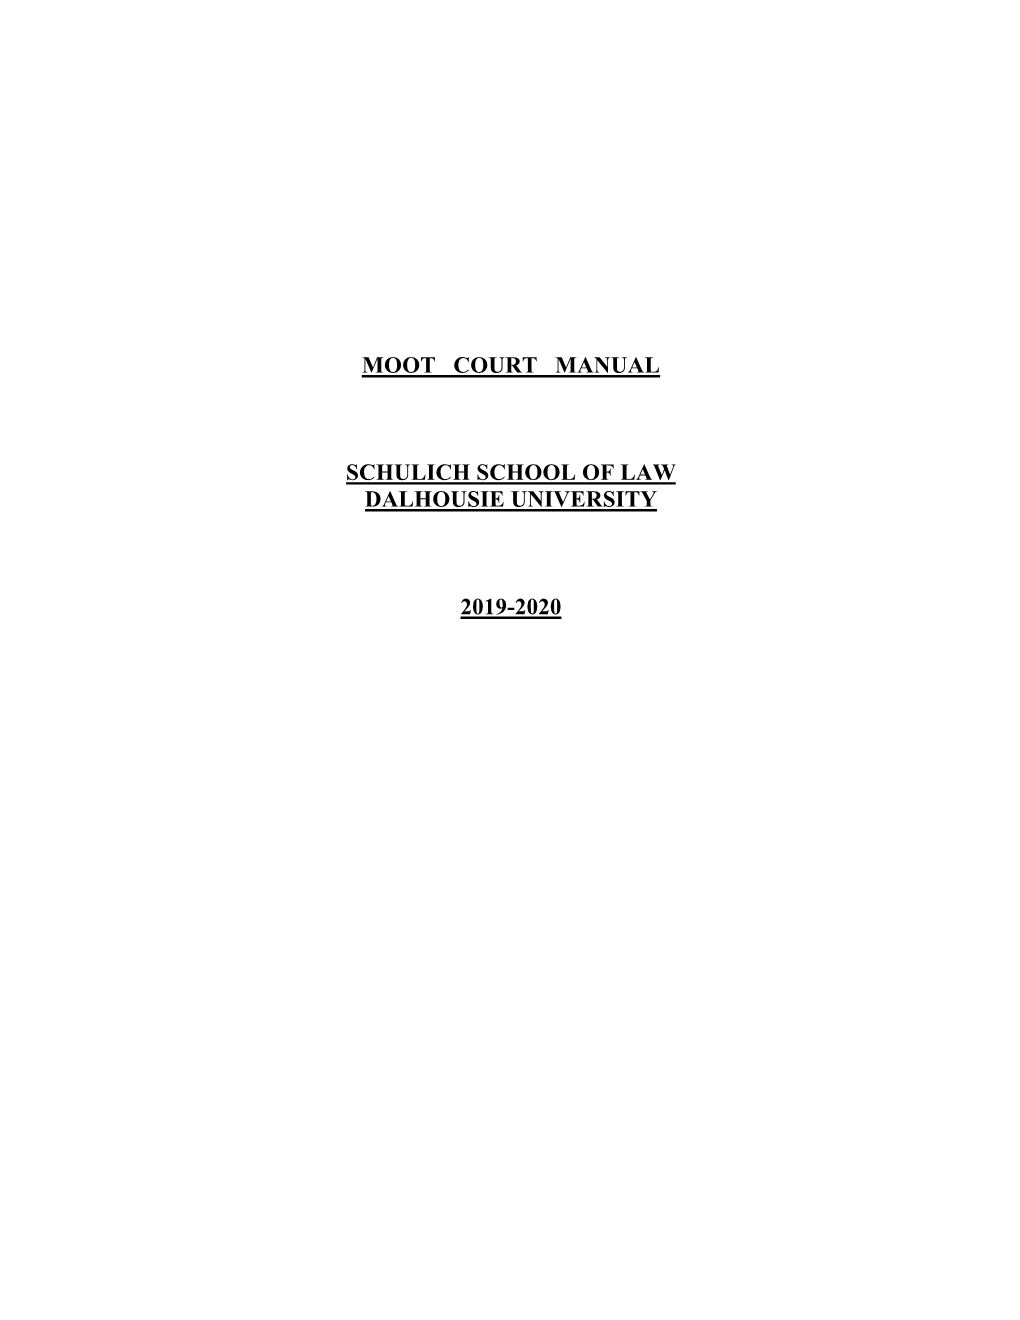 Moot Court Manual Schulich School of Law Dalhousie University 2019-2020